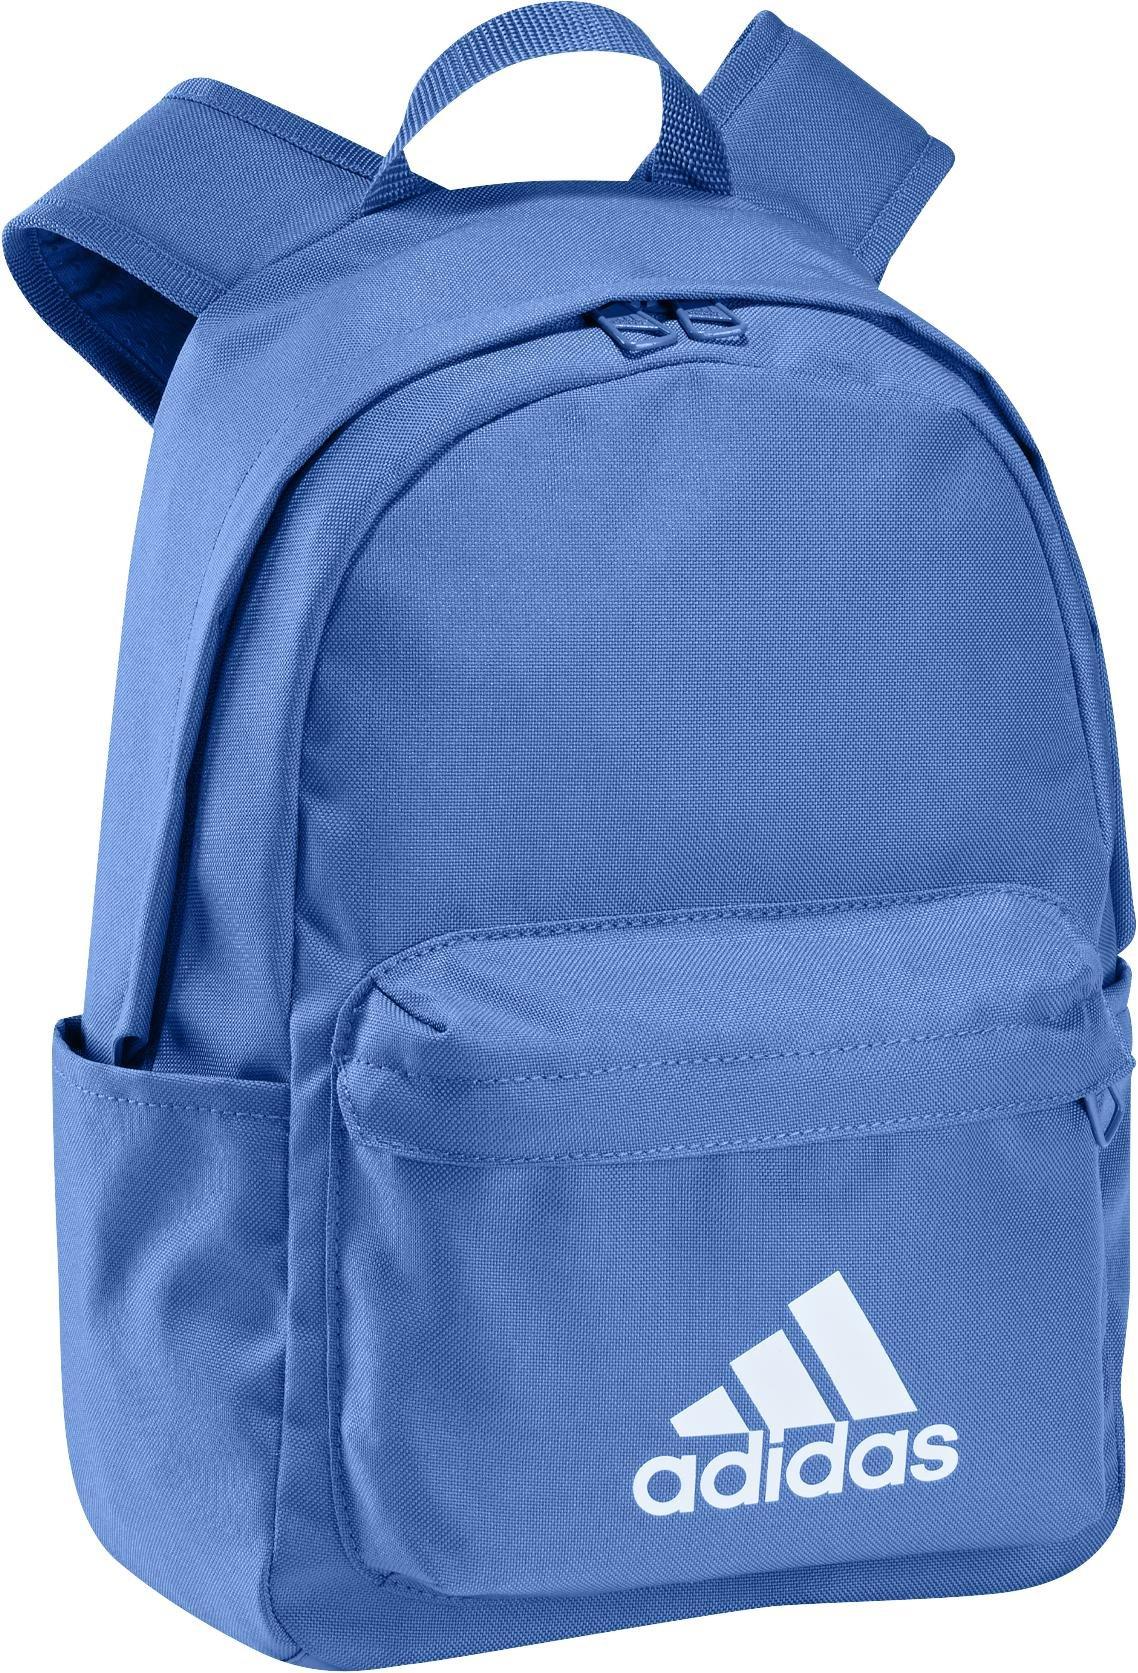 adidas - Unisex Kids Backpack, Blue